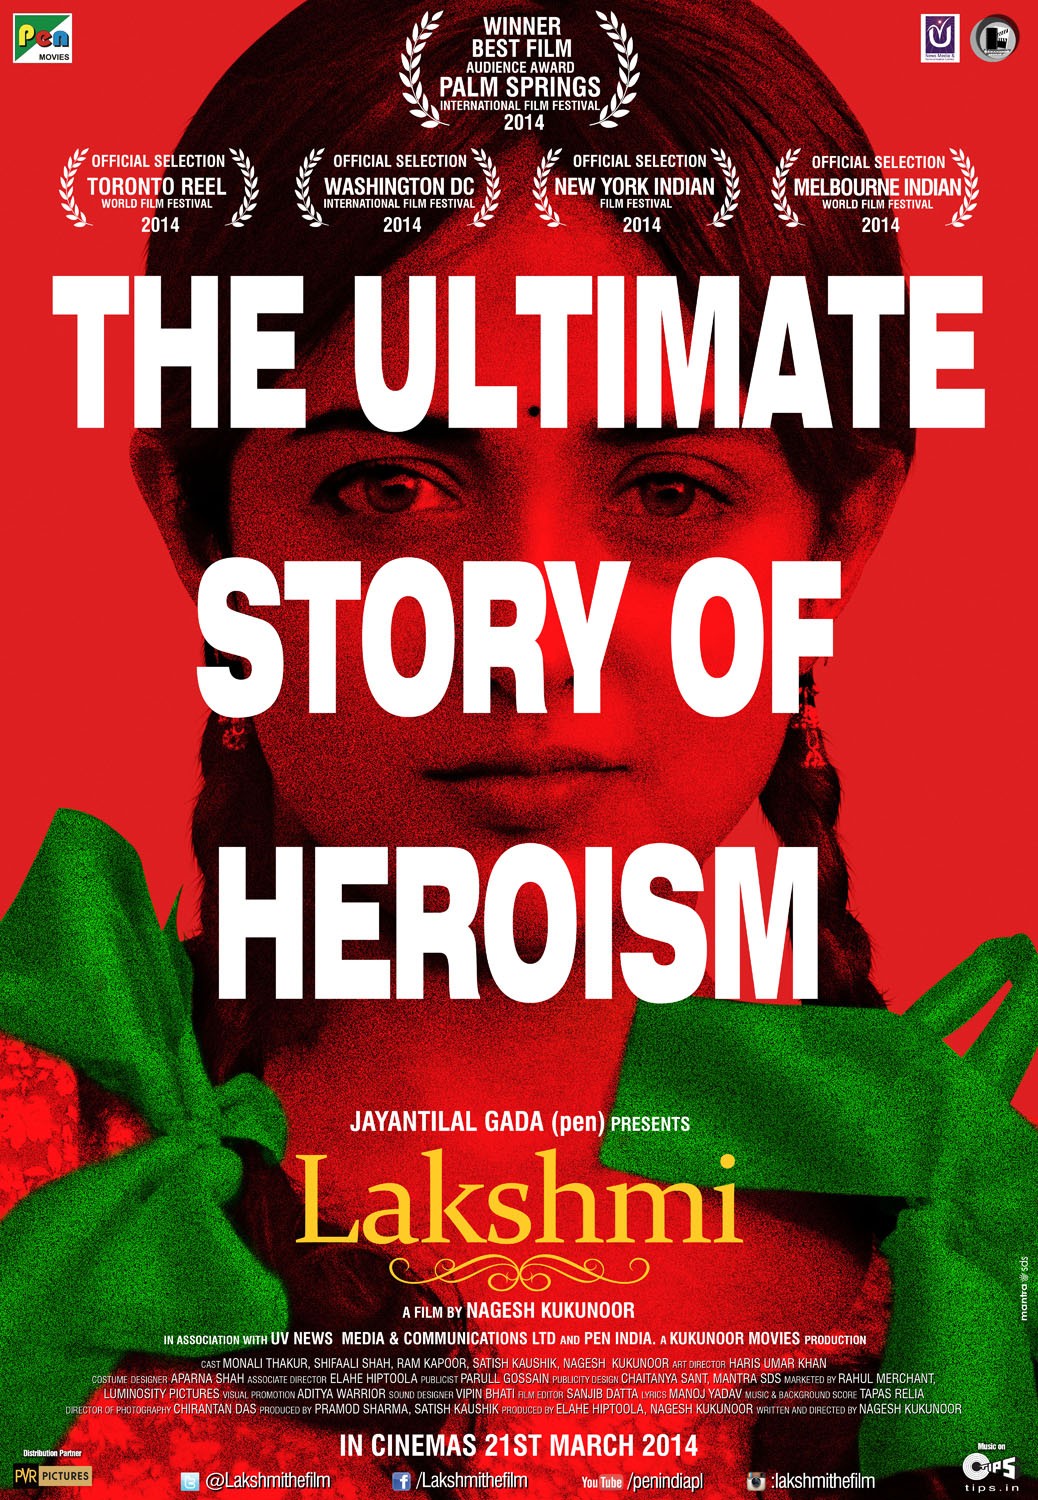 Extra Large Movie Poster Image for Lakshmi 